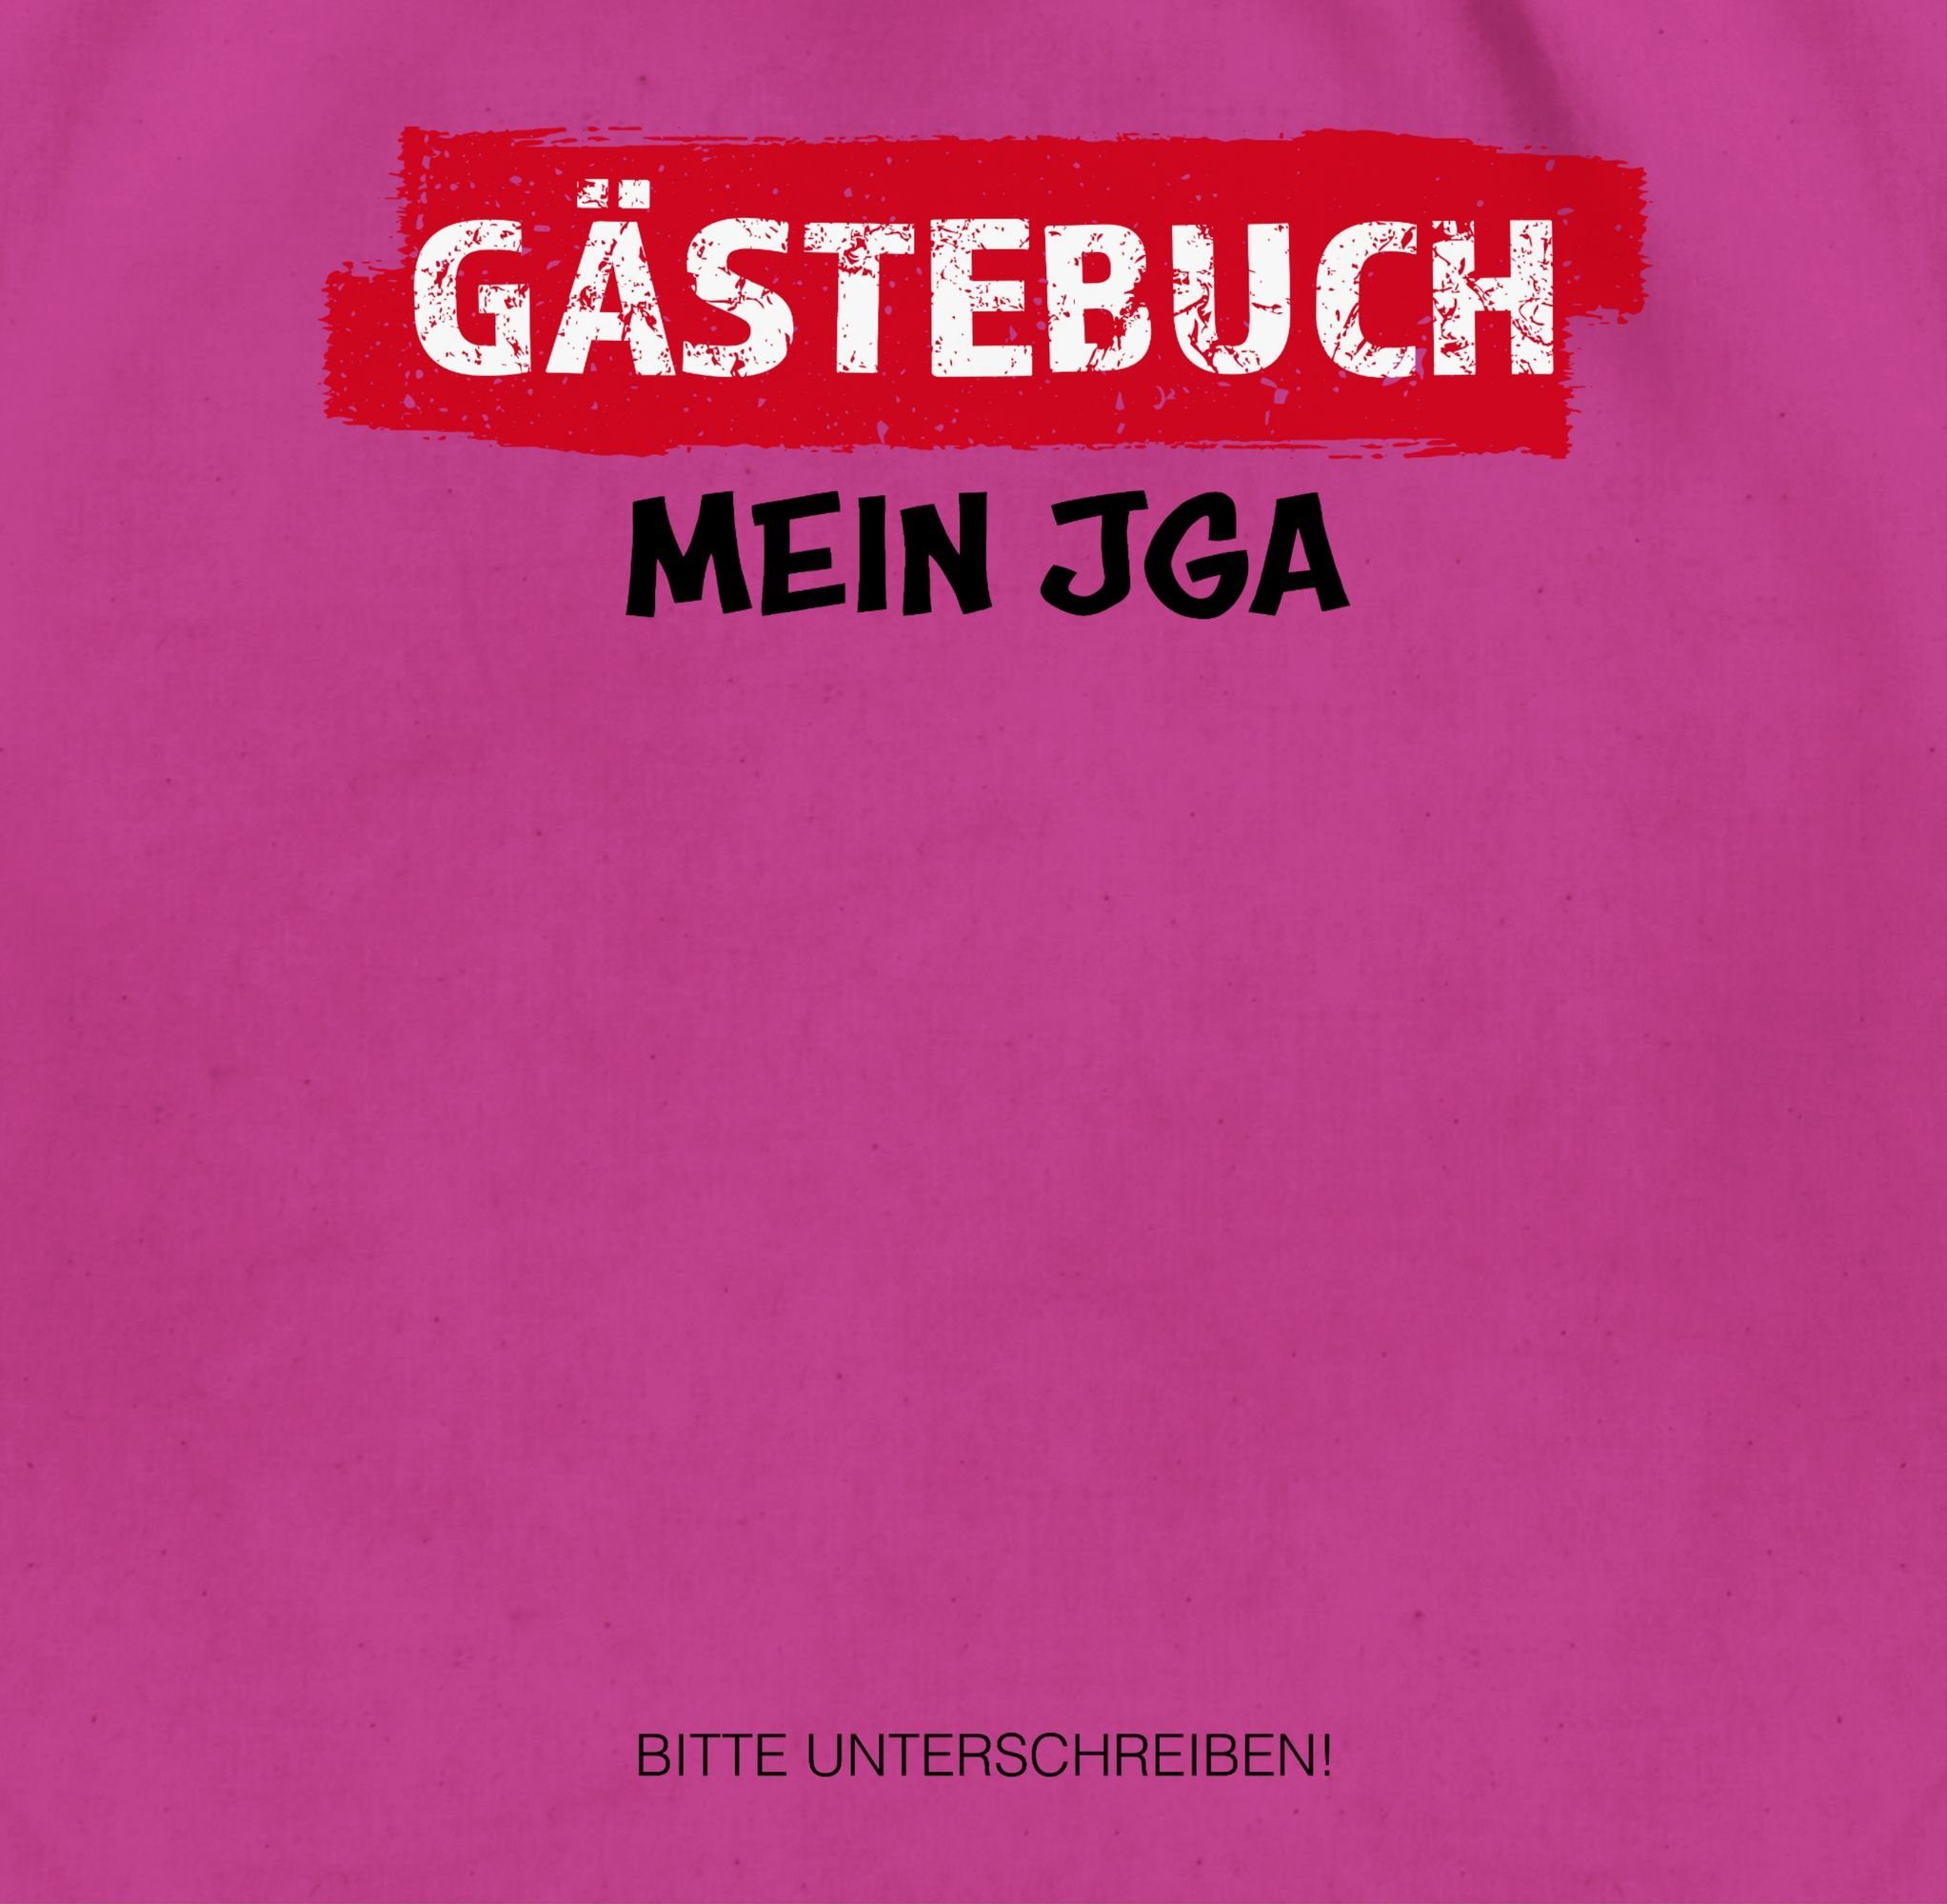 Turnbeutel Fuchsia Gästebuch Gäste, 03 I JGA JGA Shirtracer Unterschreiben Männer